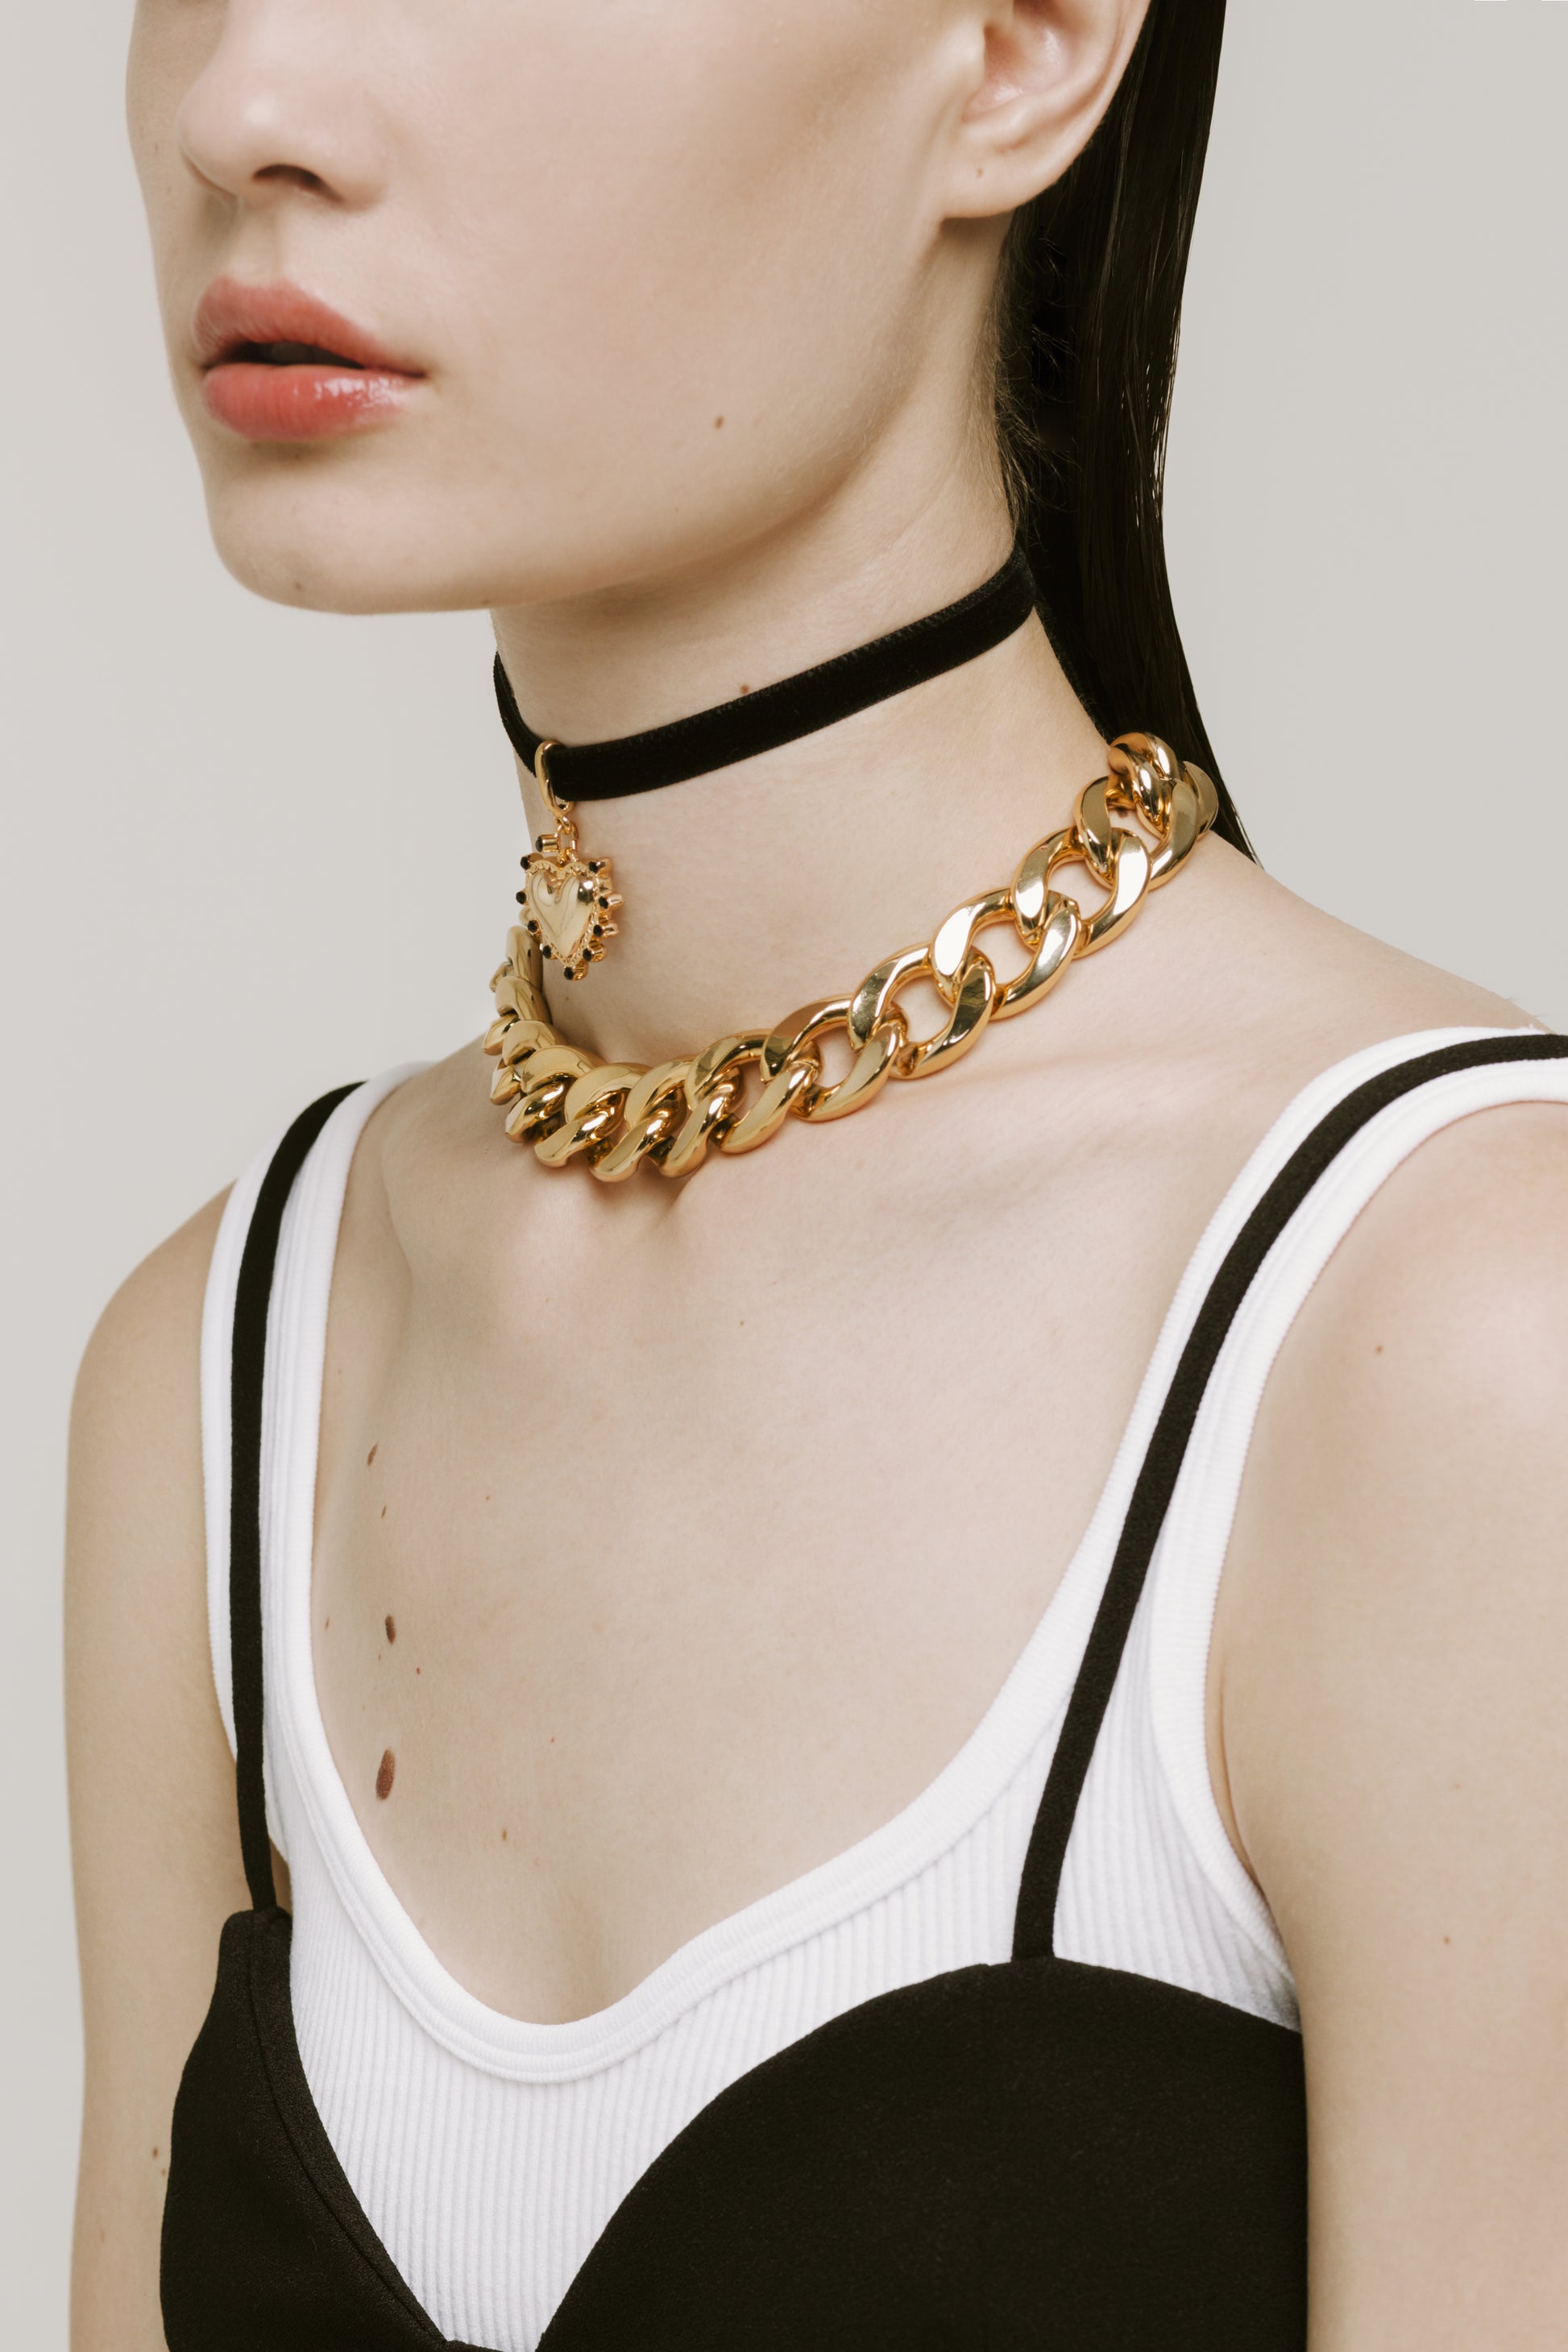 Linda Gold Chain Necklace | Handmade in Italy – ALMAROW Milano